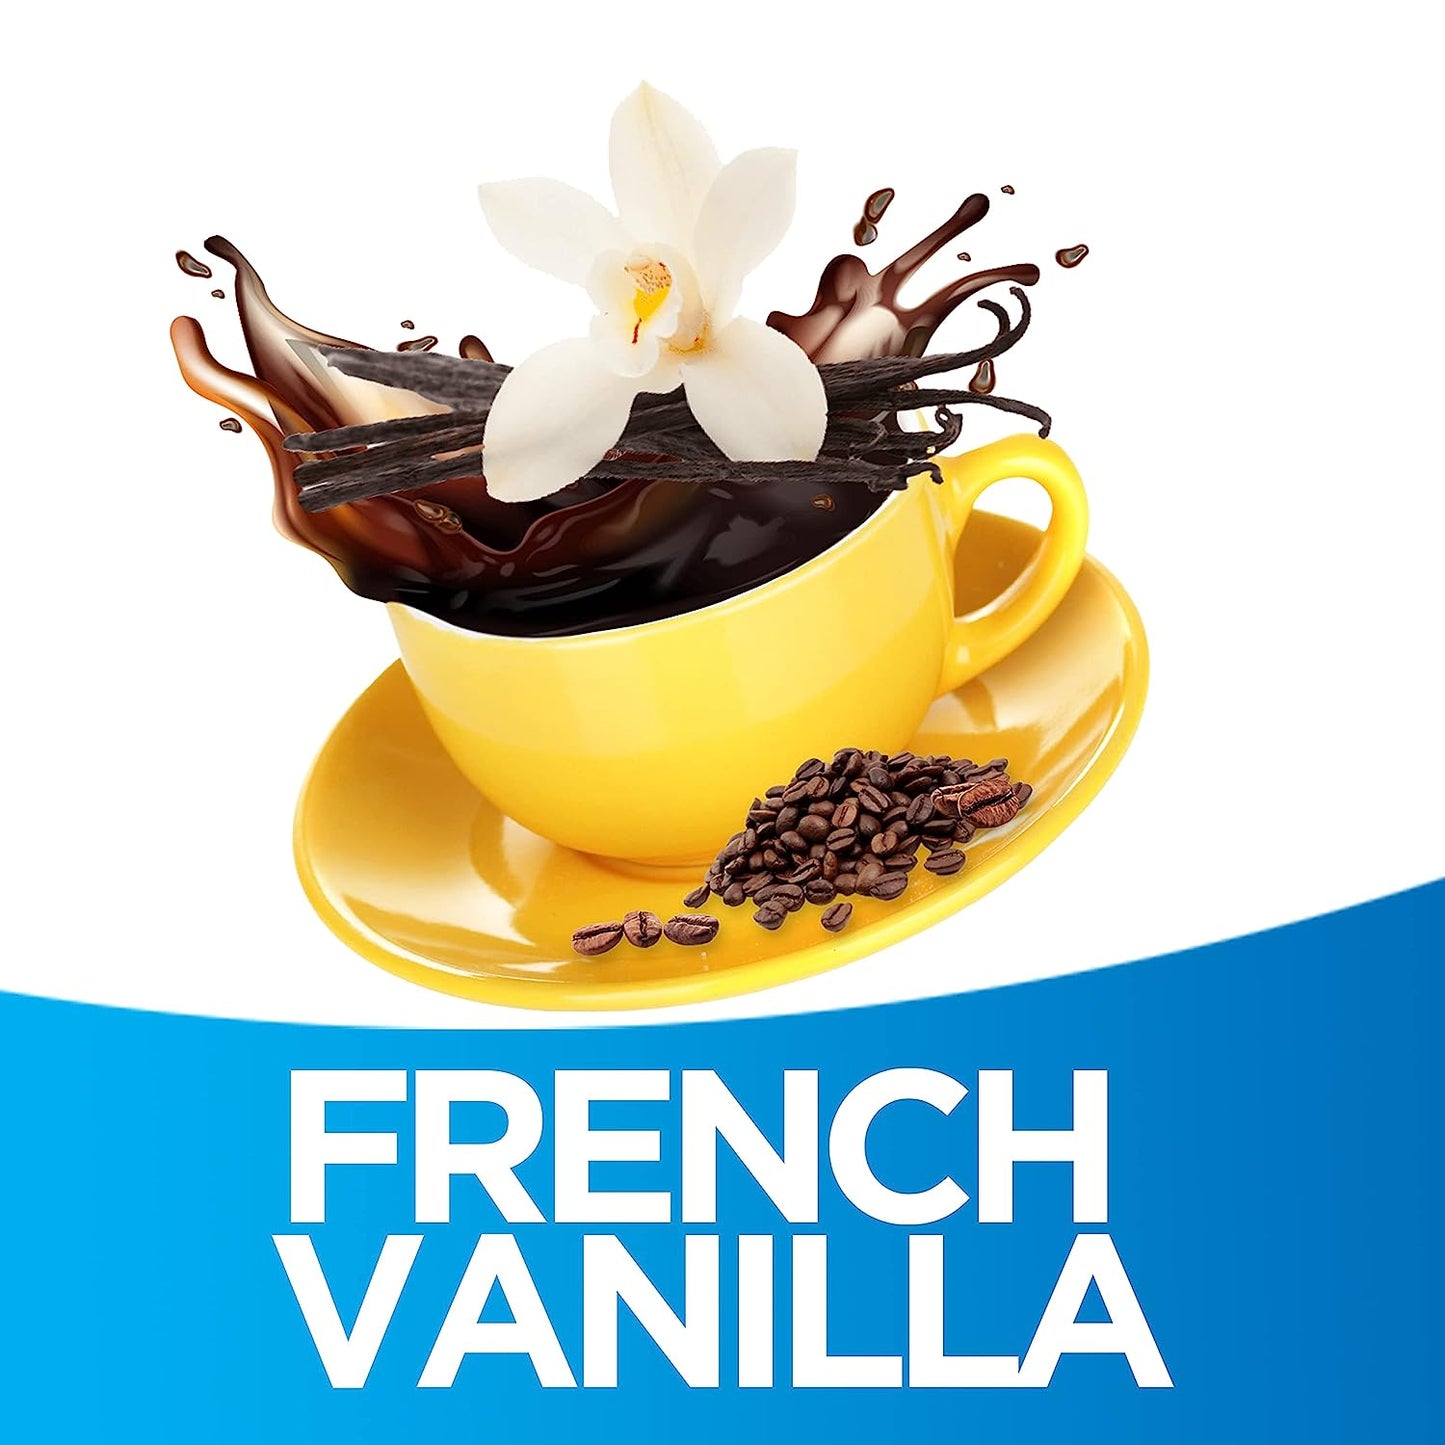 International Delight Coffee Creamer Singles - 2 Rich Flavors - French Vanilla & Hazelnut Creamer - 192ct of Variety Pack - 96 Cups of Each Flavor - Liquid Coffee Creamer - No Refrigeration Required